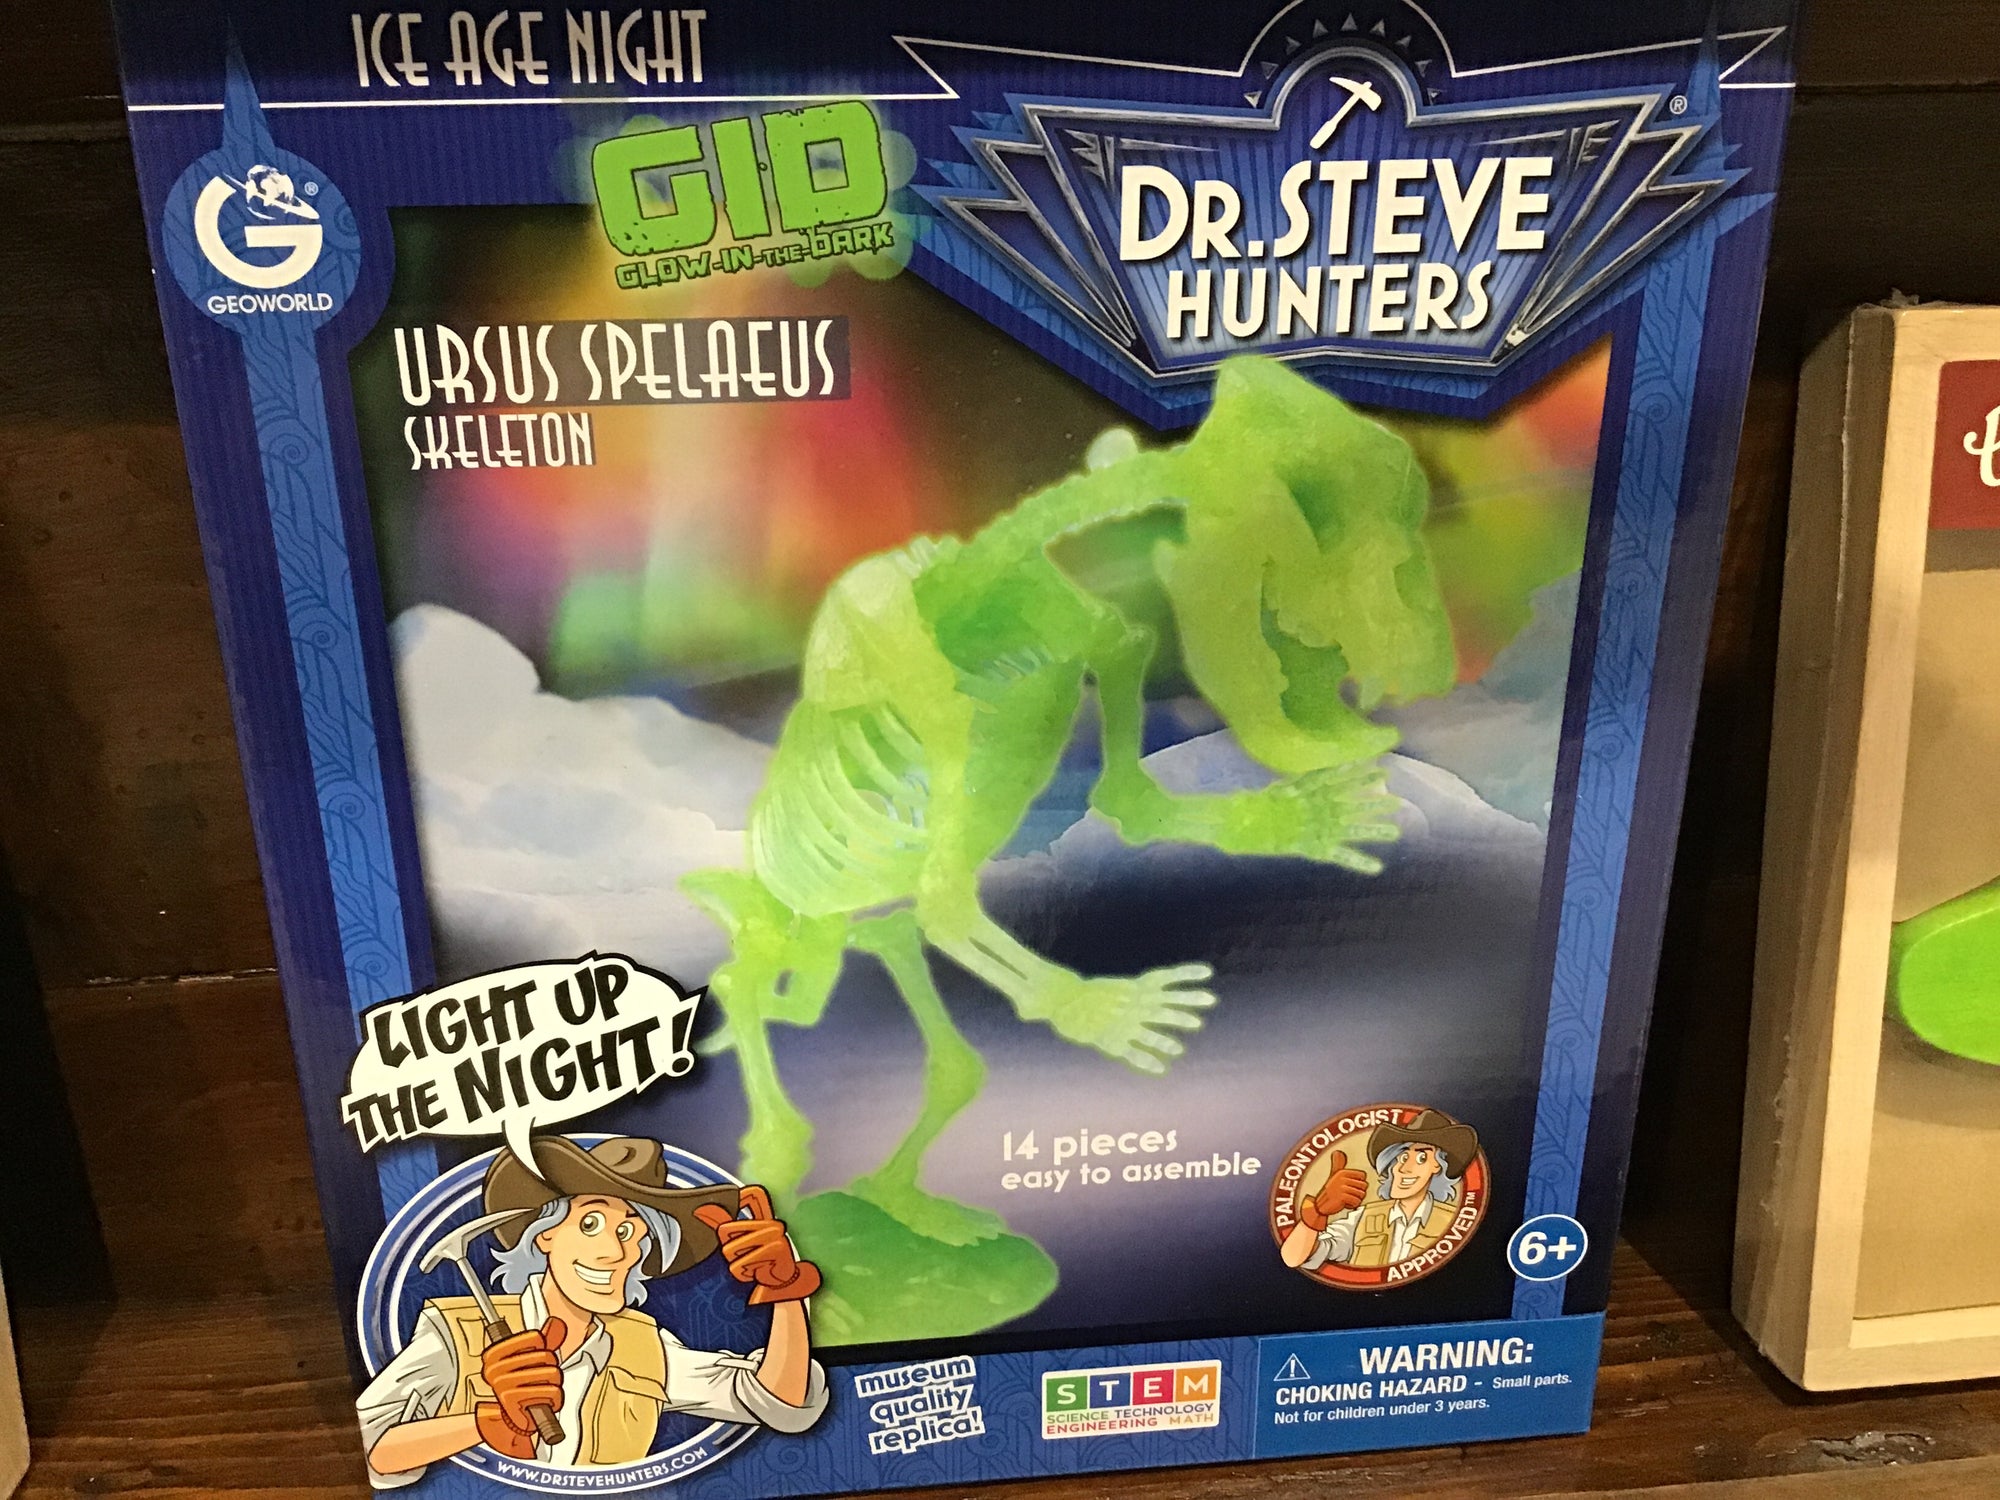 Ice age night model